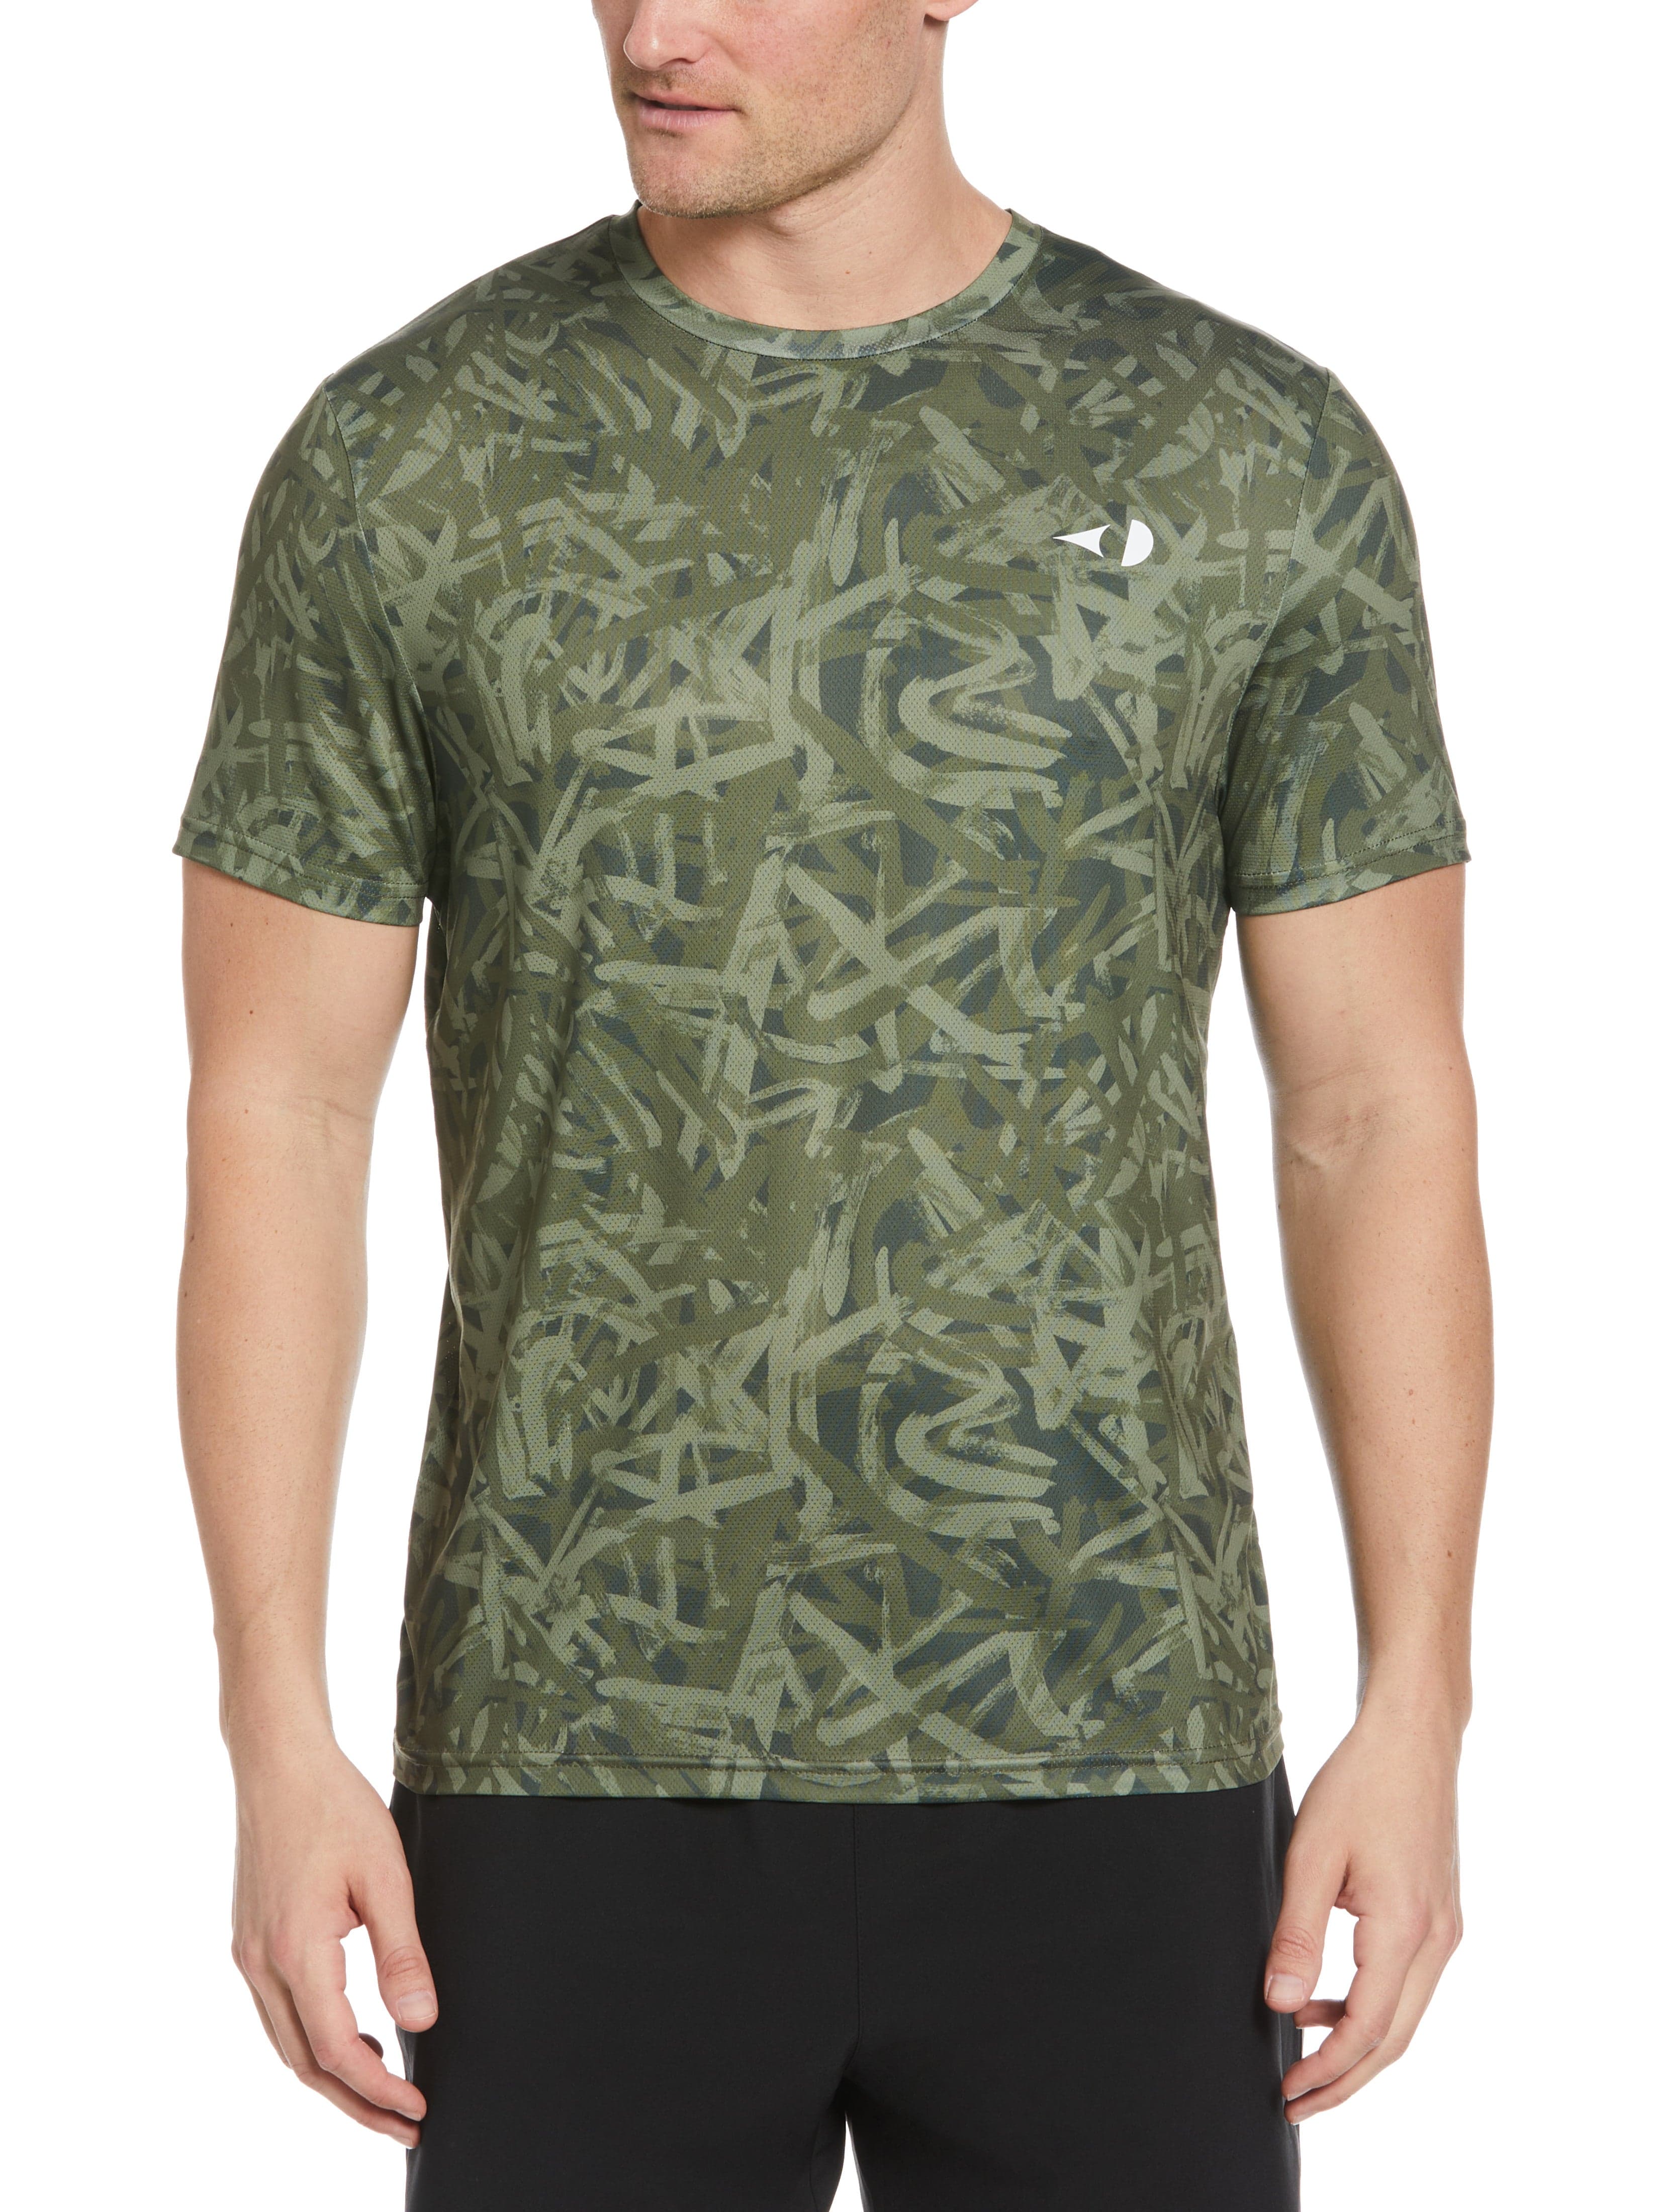 Grand Slam Mens Graffiti Print Tennis T-Shirt, Size Small, Olivine Green, Polyester/Spandex | Golf Apparel Shop